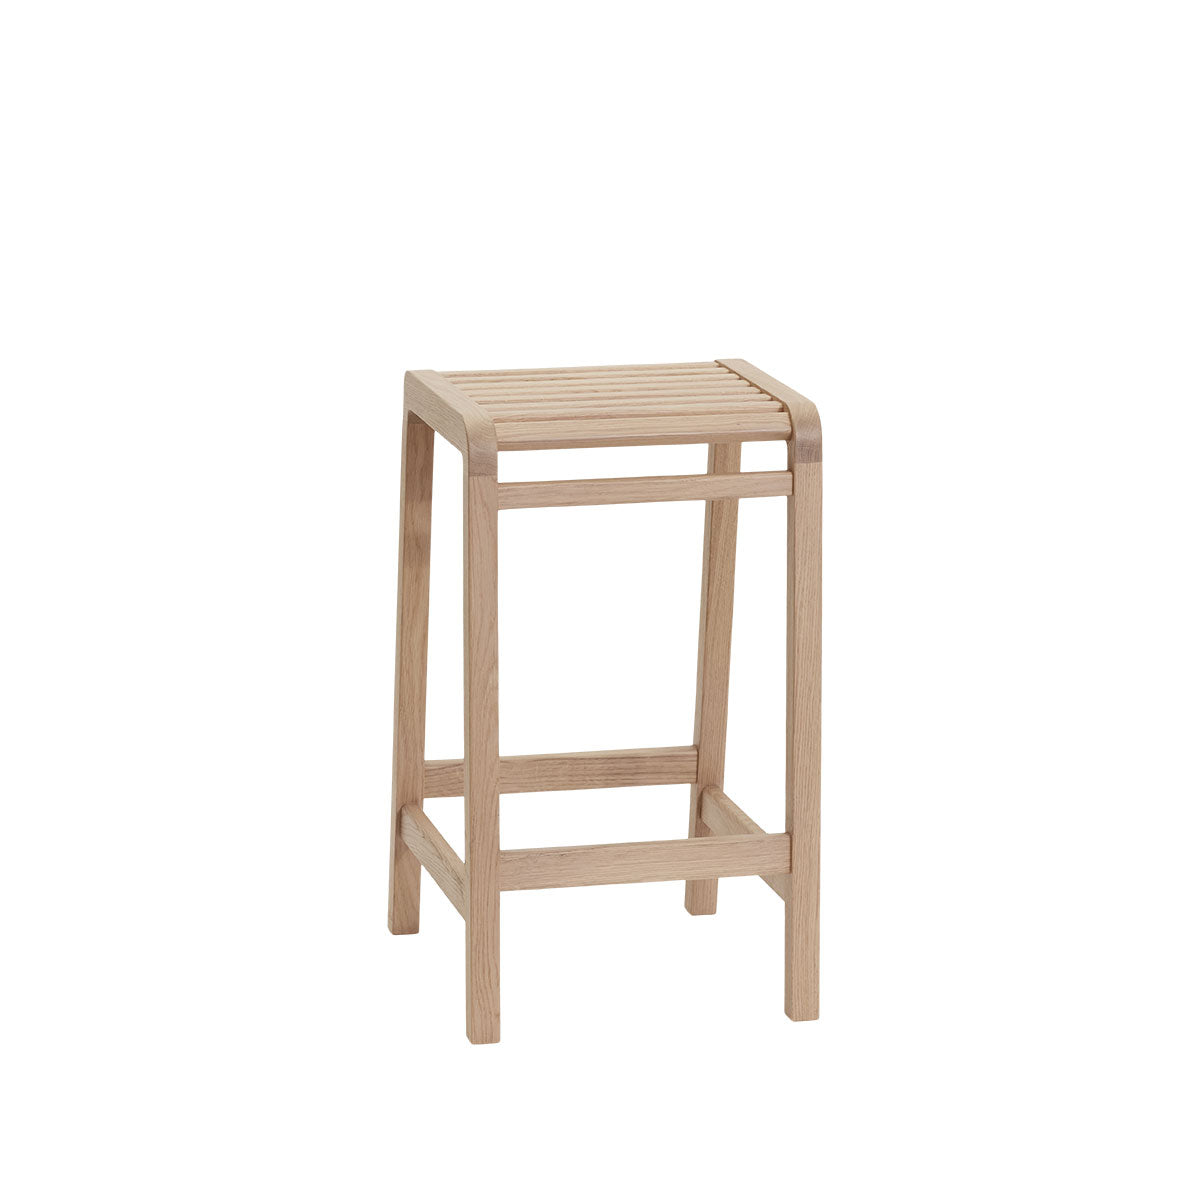 Andersen Furniture HC3 barstol - H63 cm. - DesignGaragen.dk.